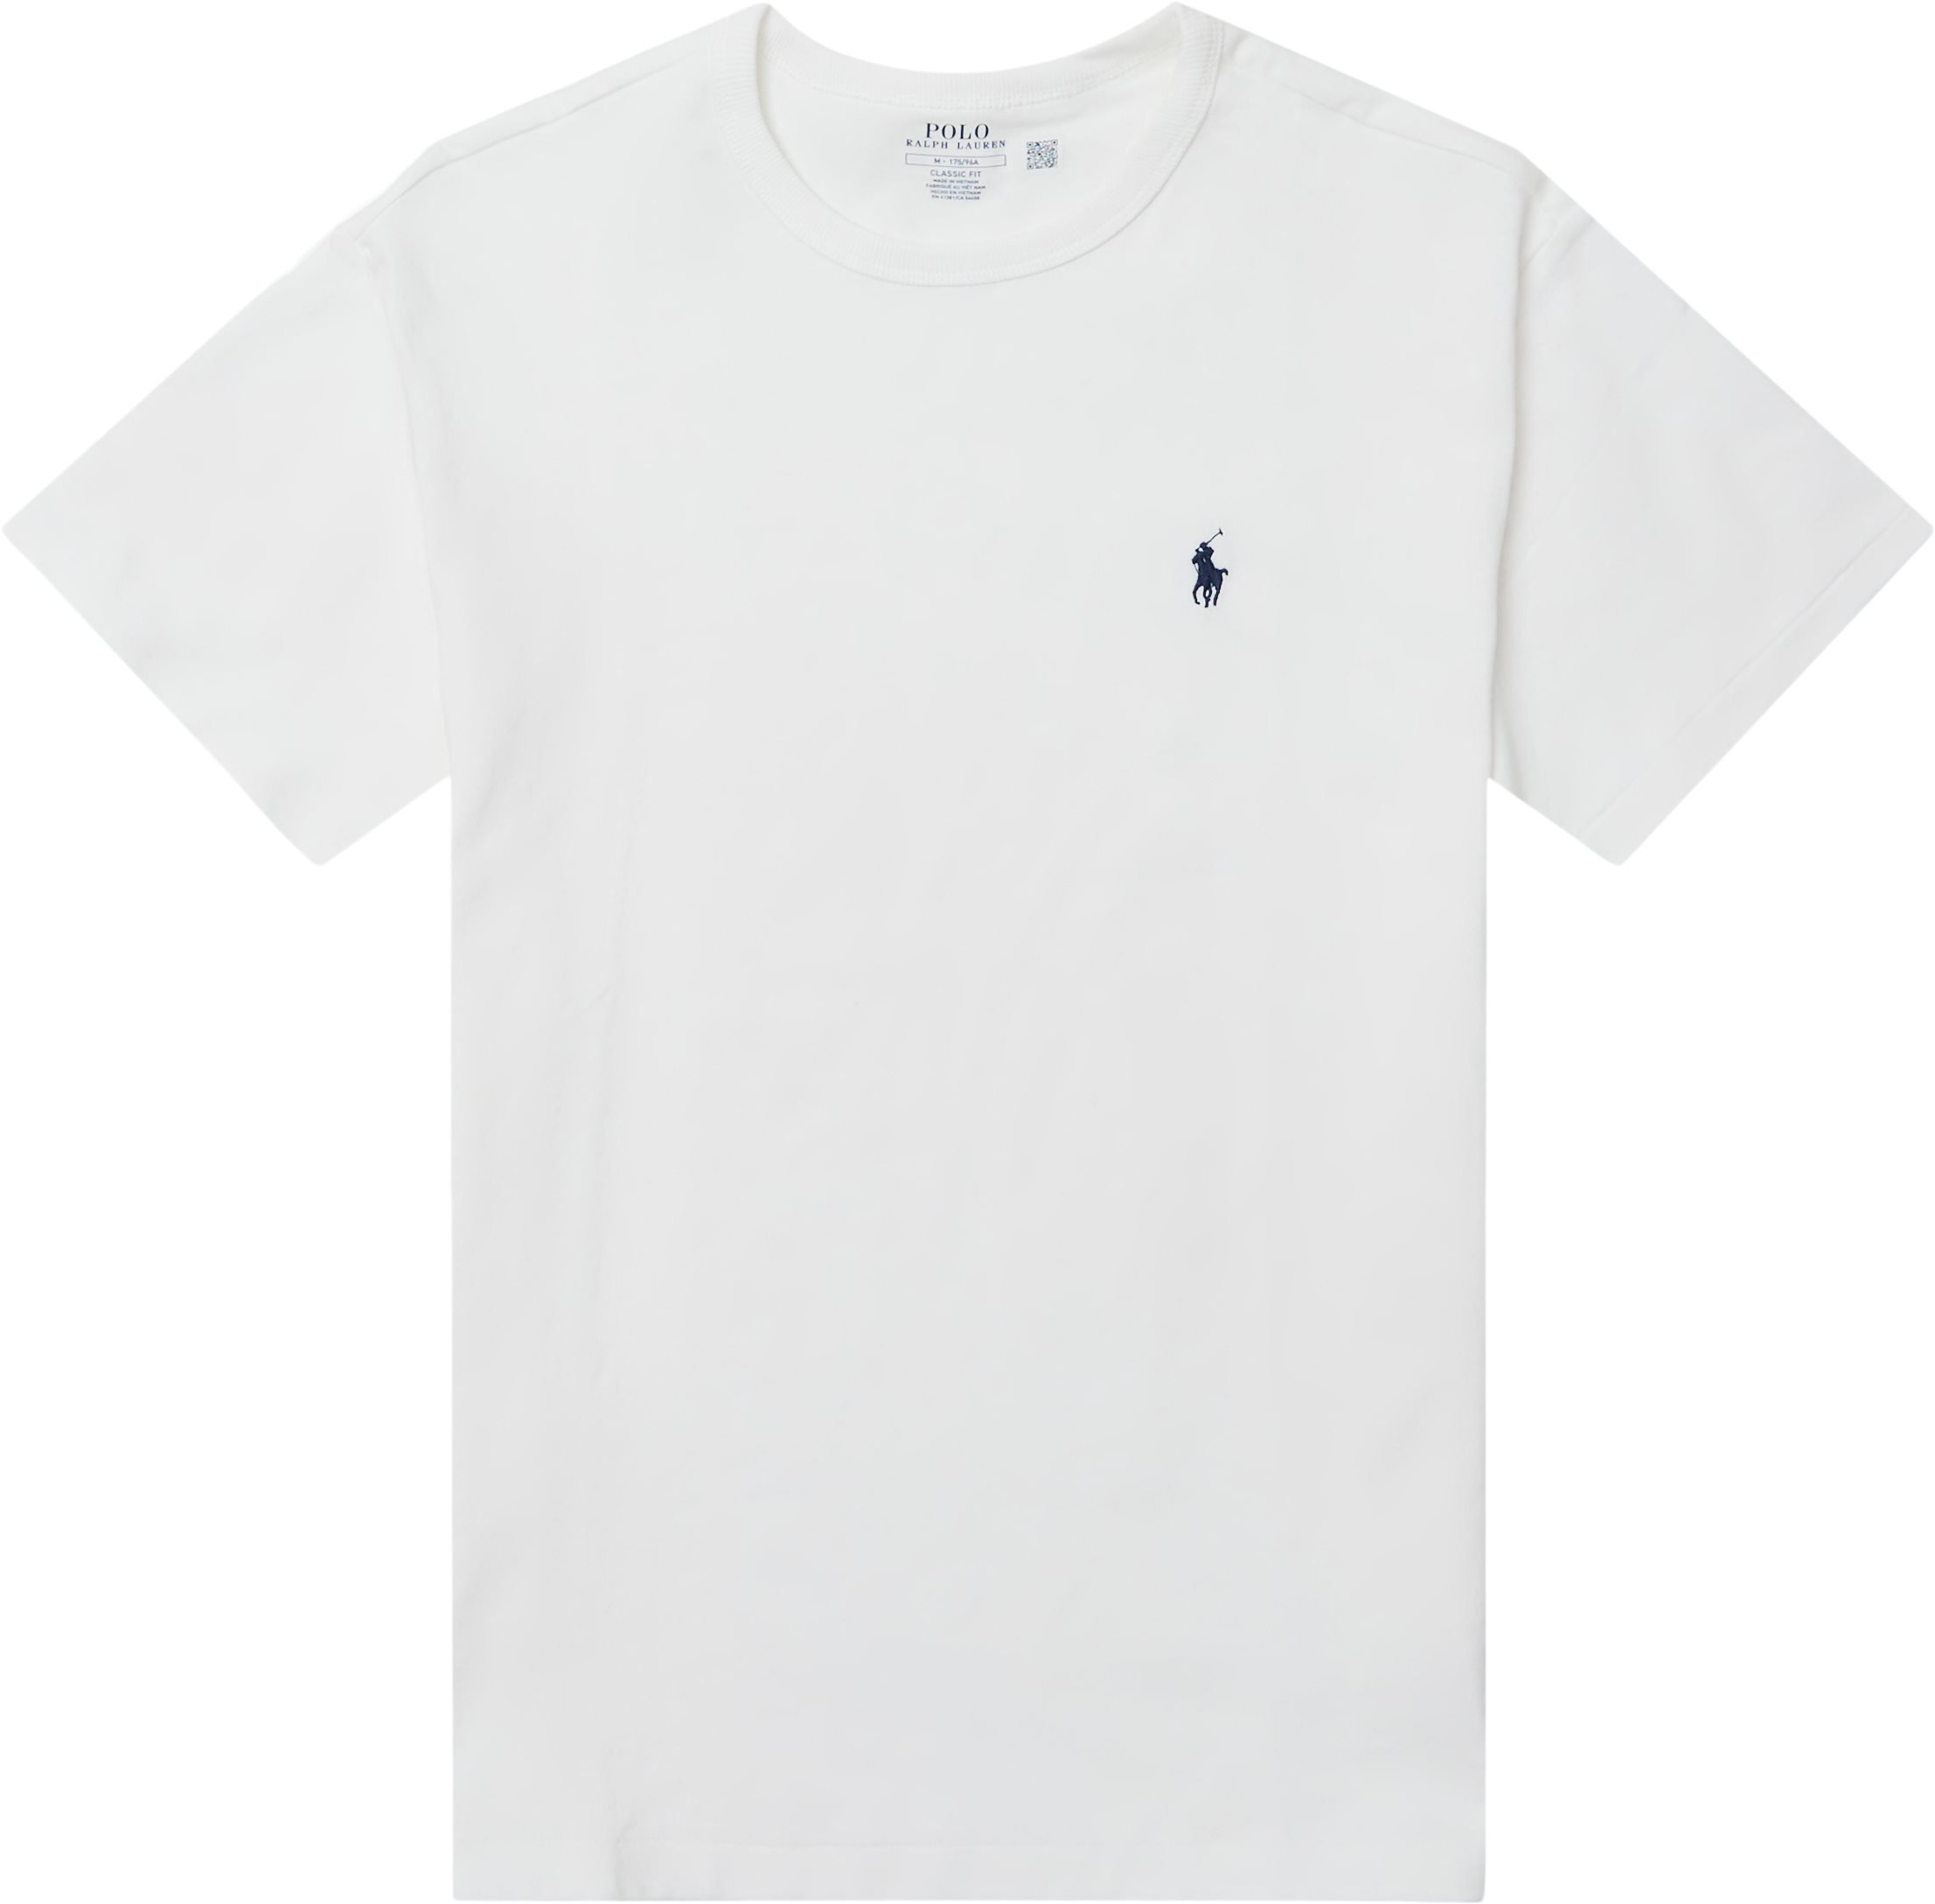 710811284 Tee - T-shirts - Regular fit - White